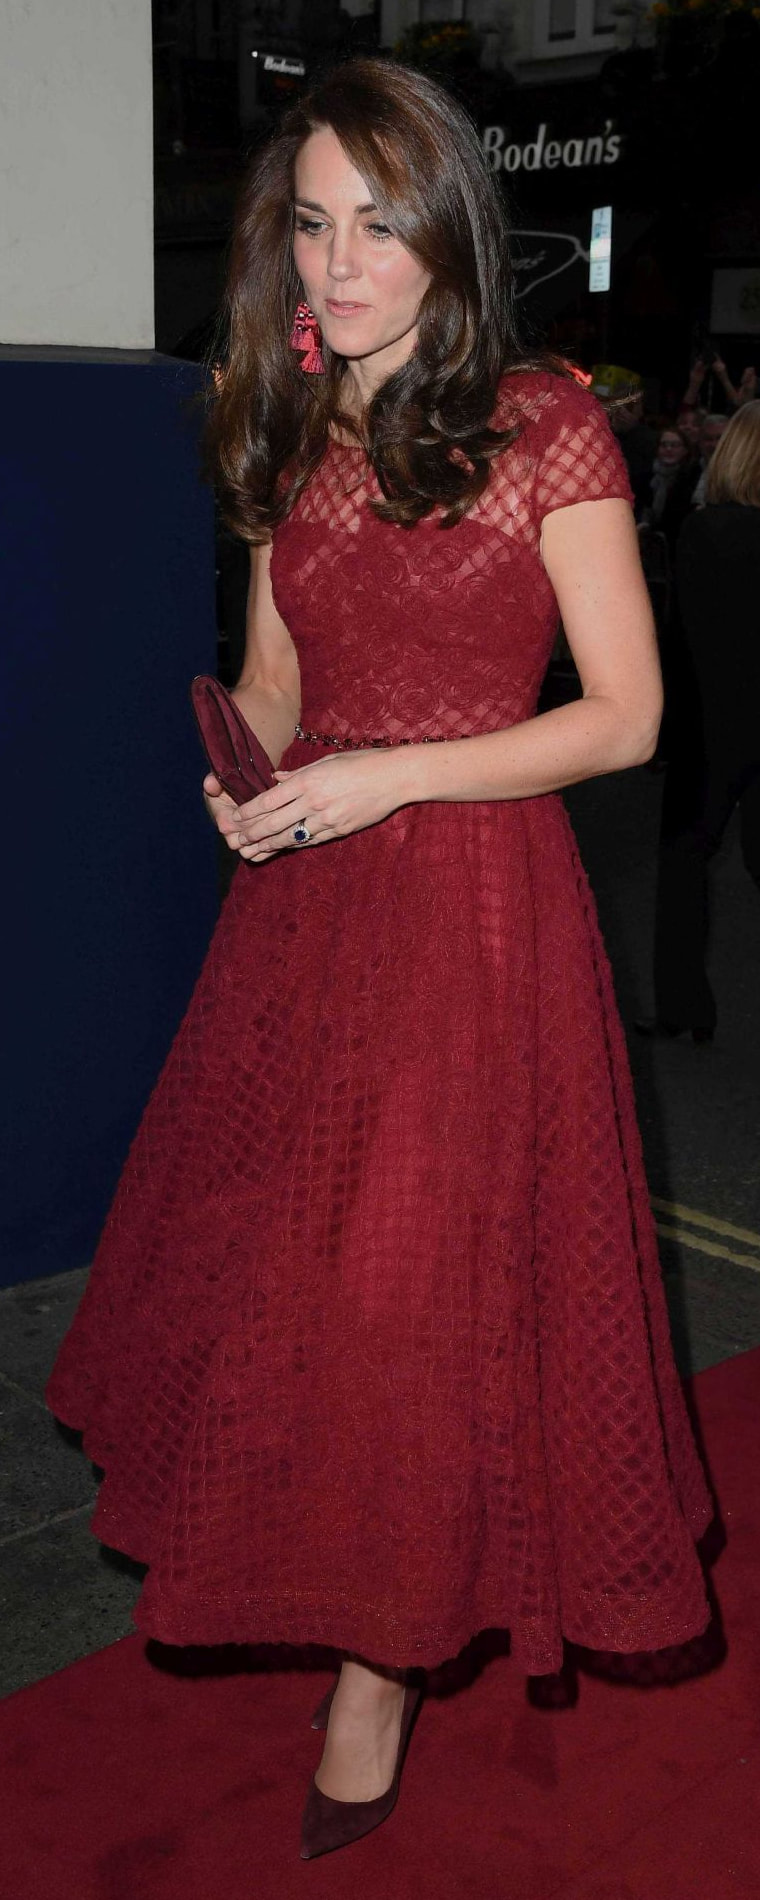 Kate Spade New York Pretty Pom Tassel Drop Earrings​ as seen on Kate Middleton, The Duchess of Cambridge.